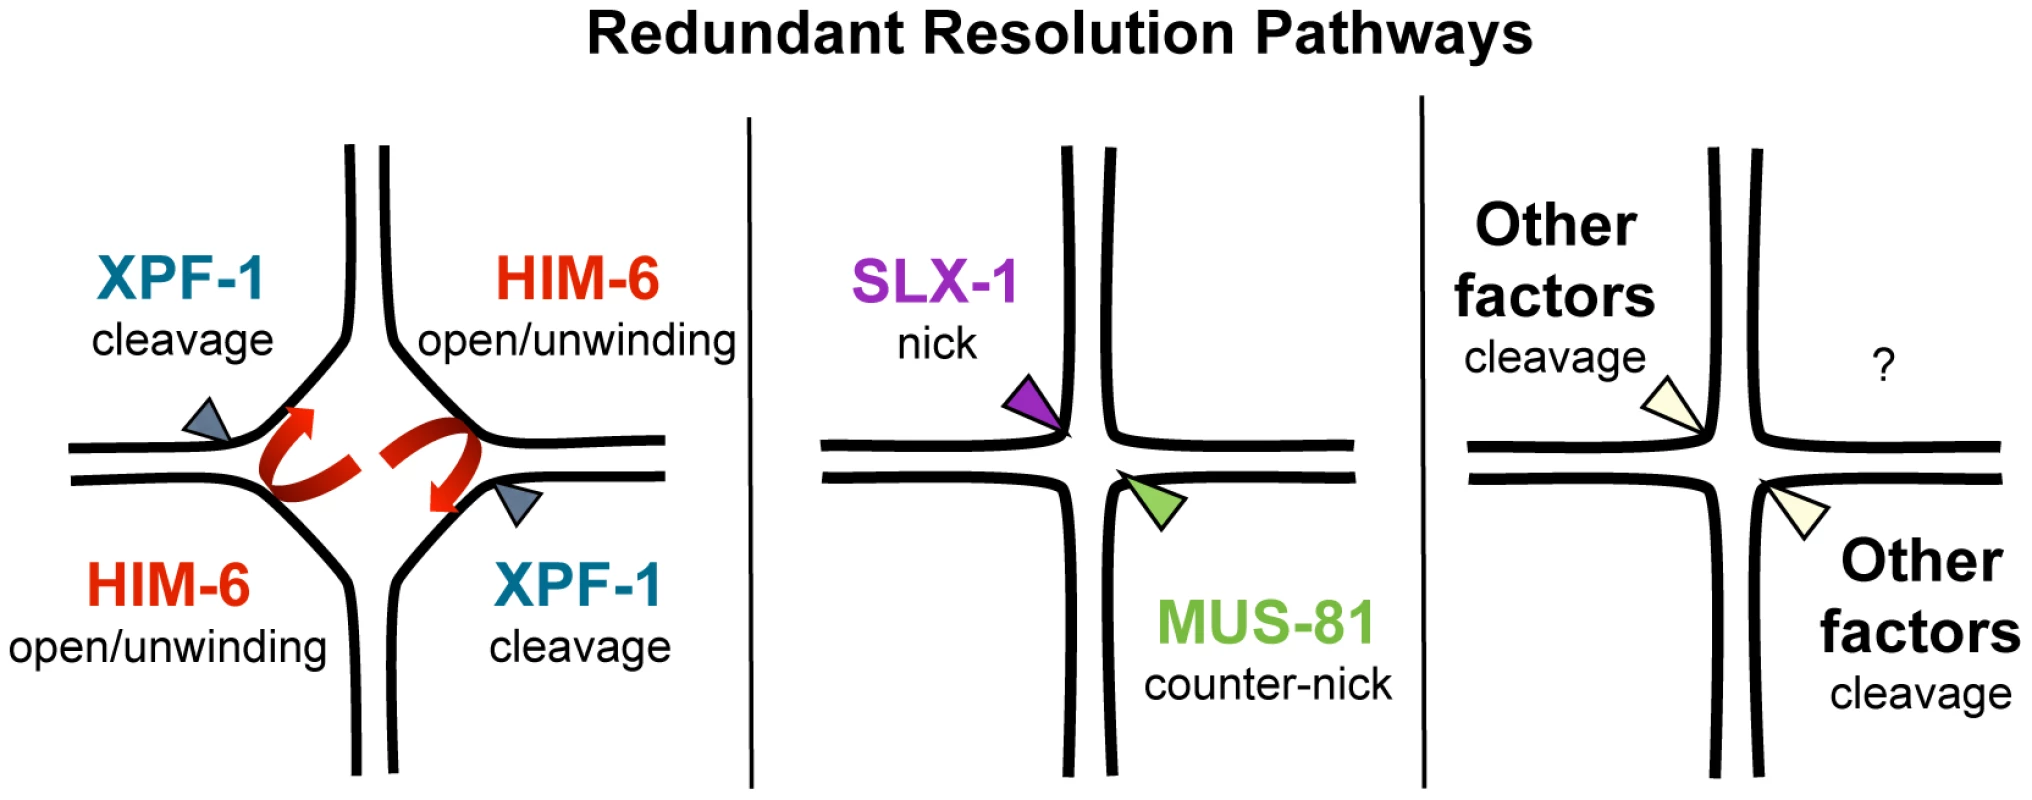 Model of redundant resolution pathways.